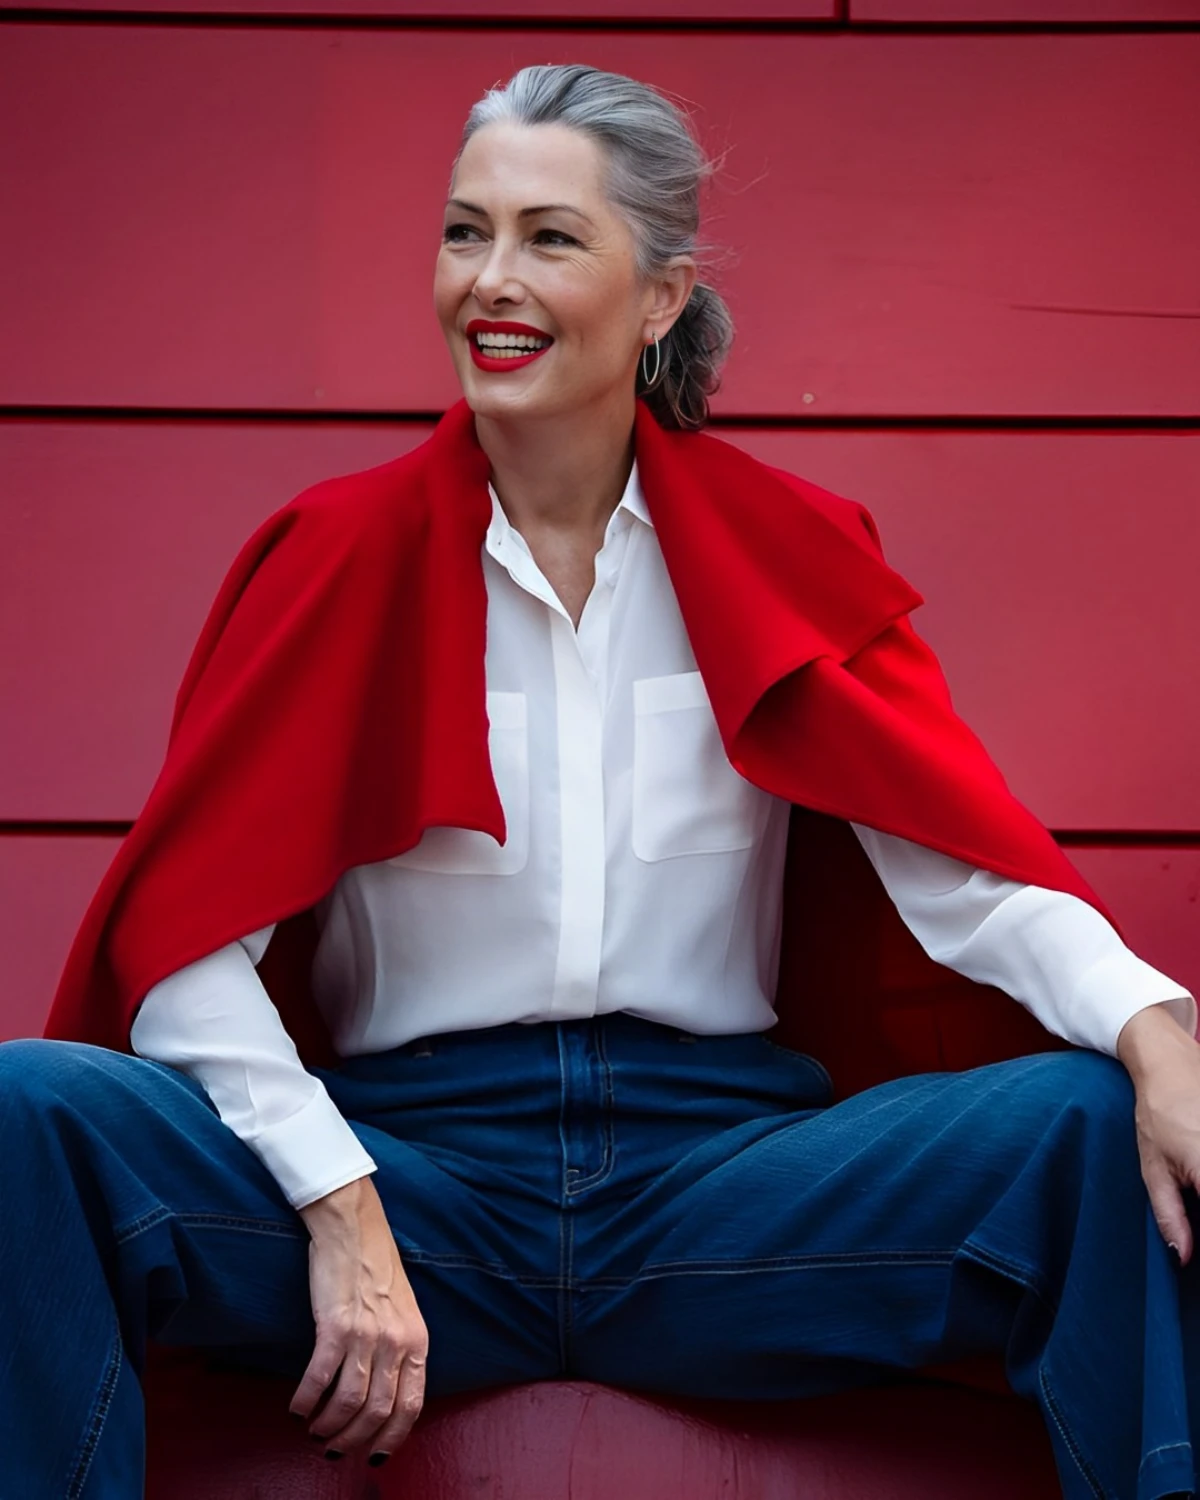 jean veste blanche echarpe rouge femme 60 ans tendance